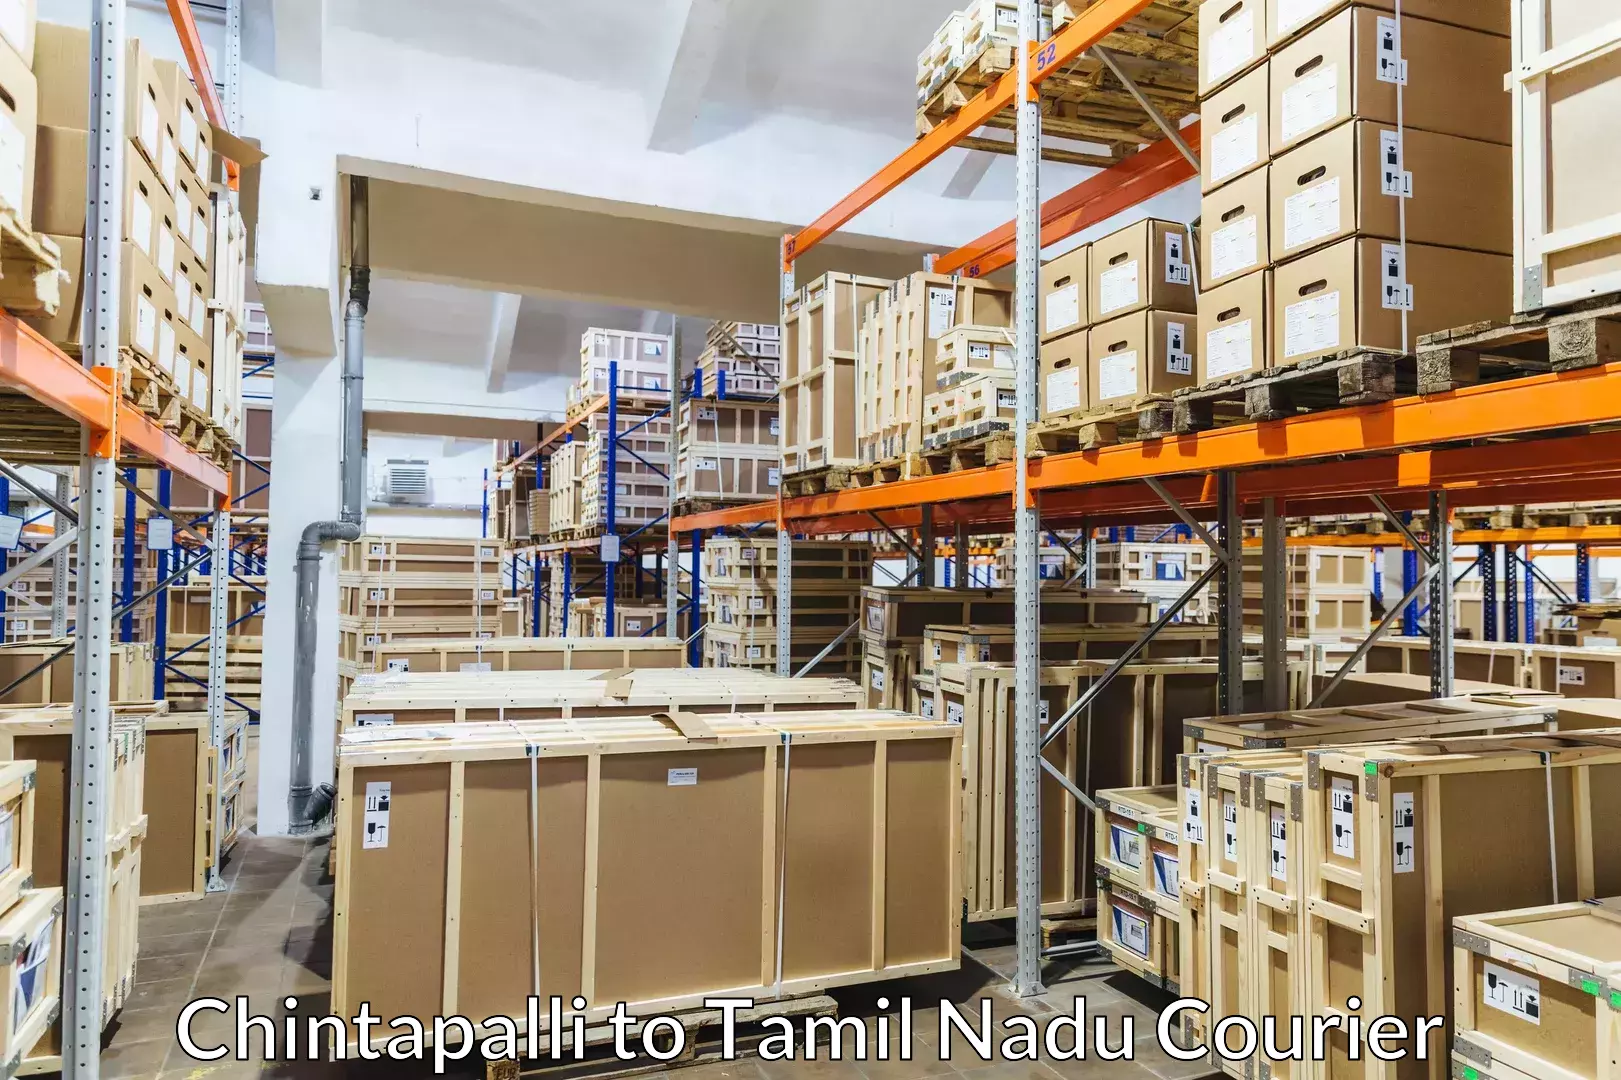 Professional moving company Chintapalli to Srirangam